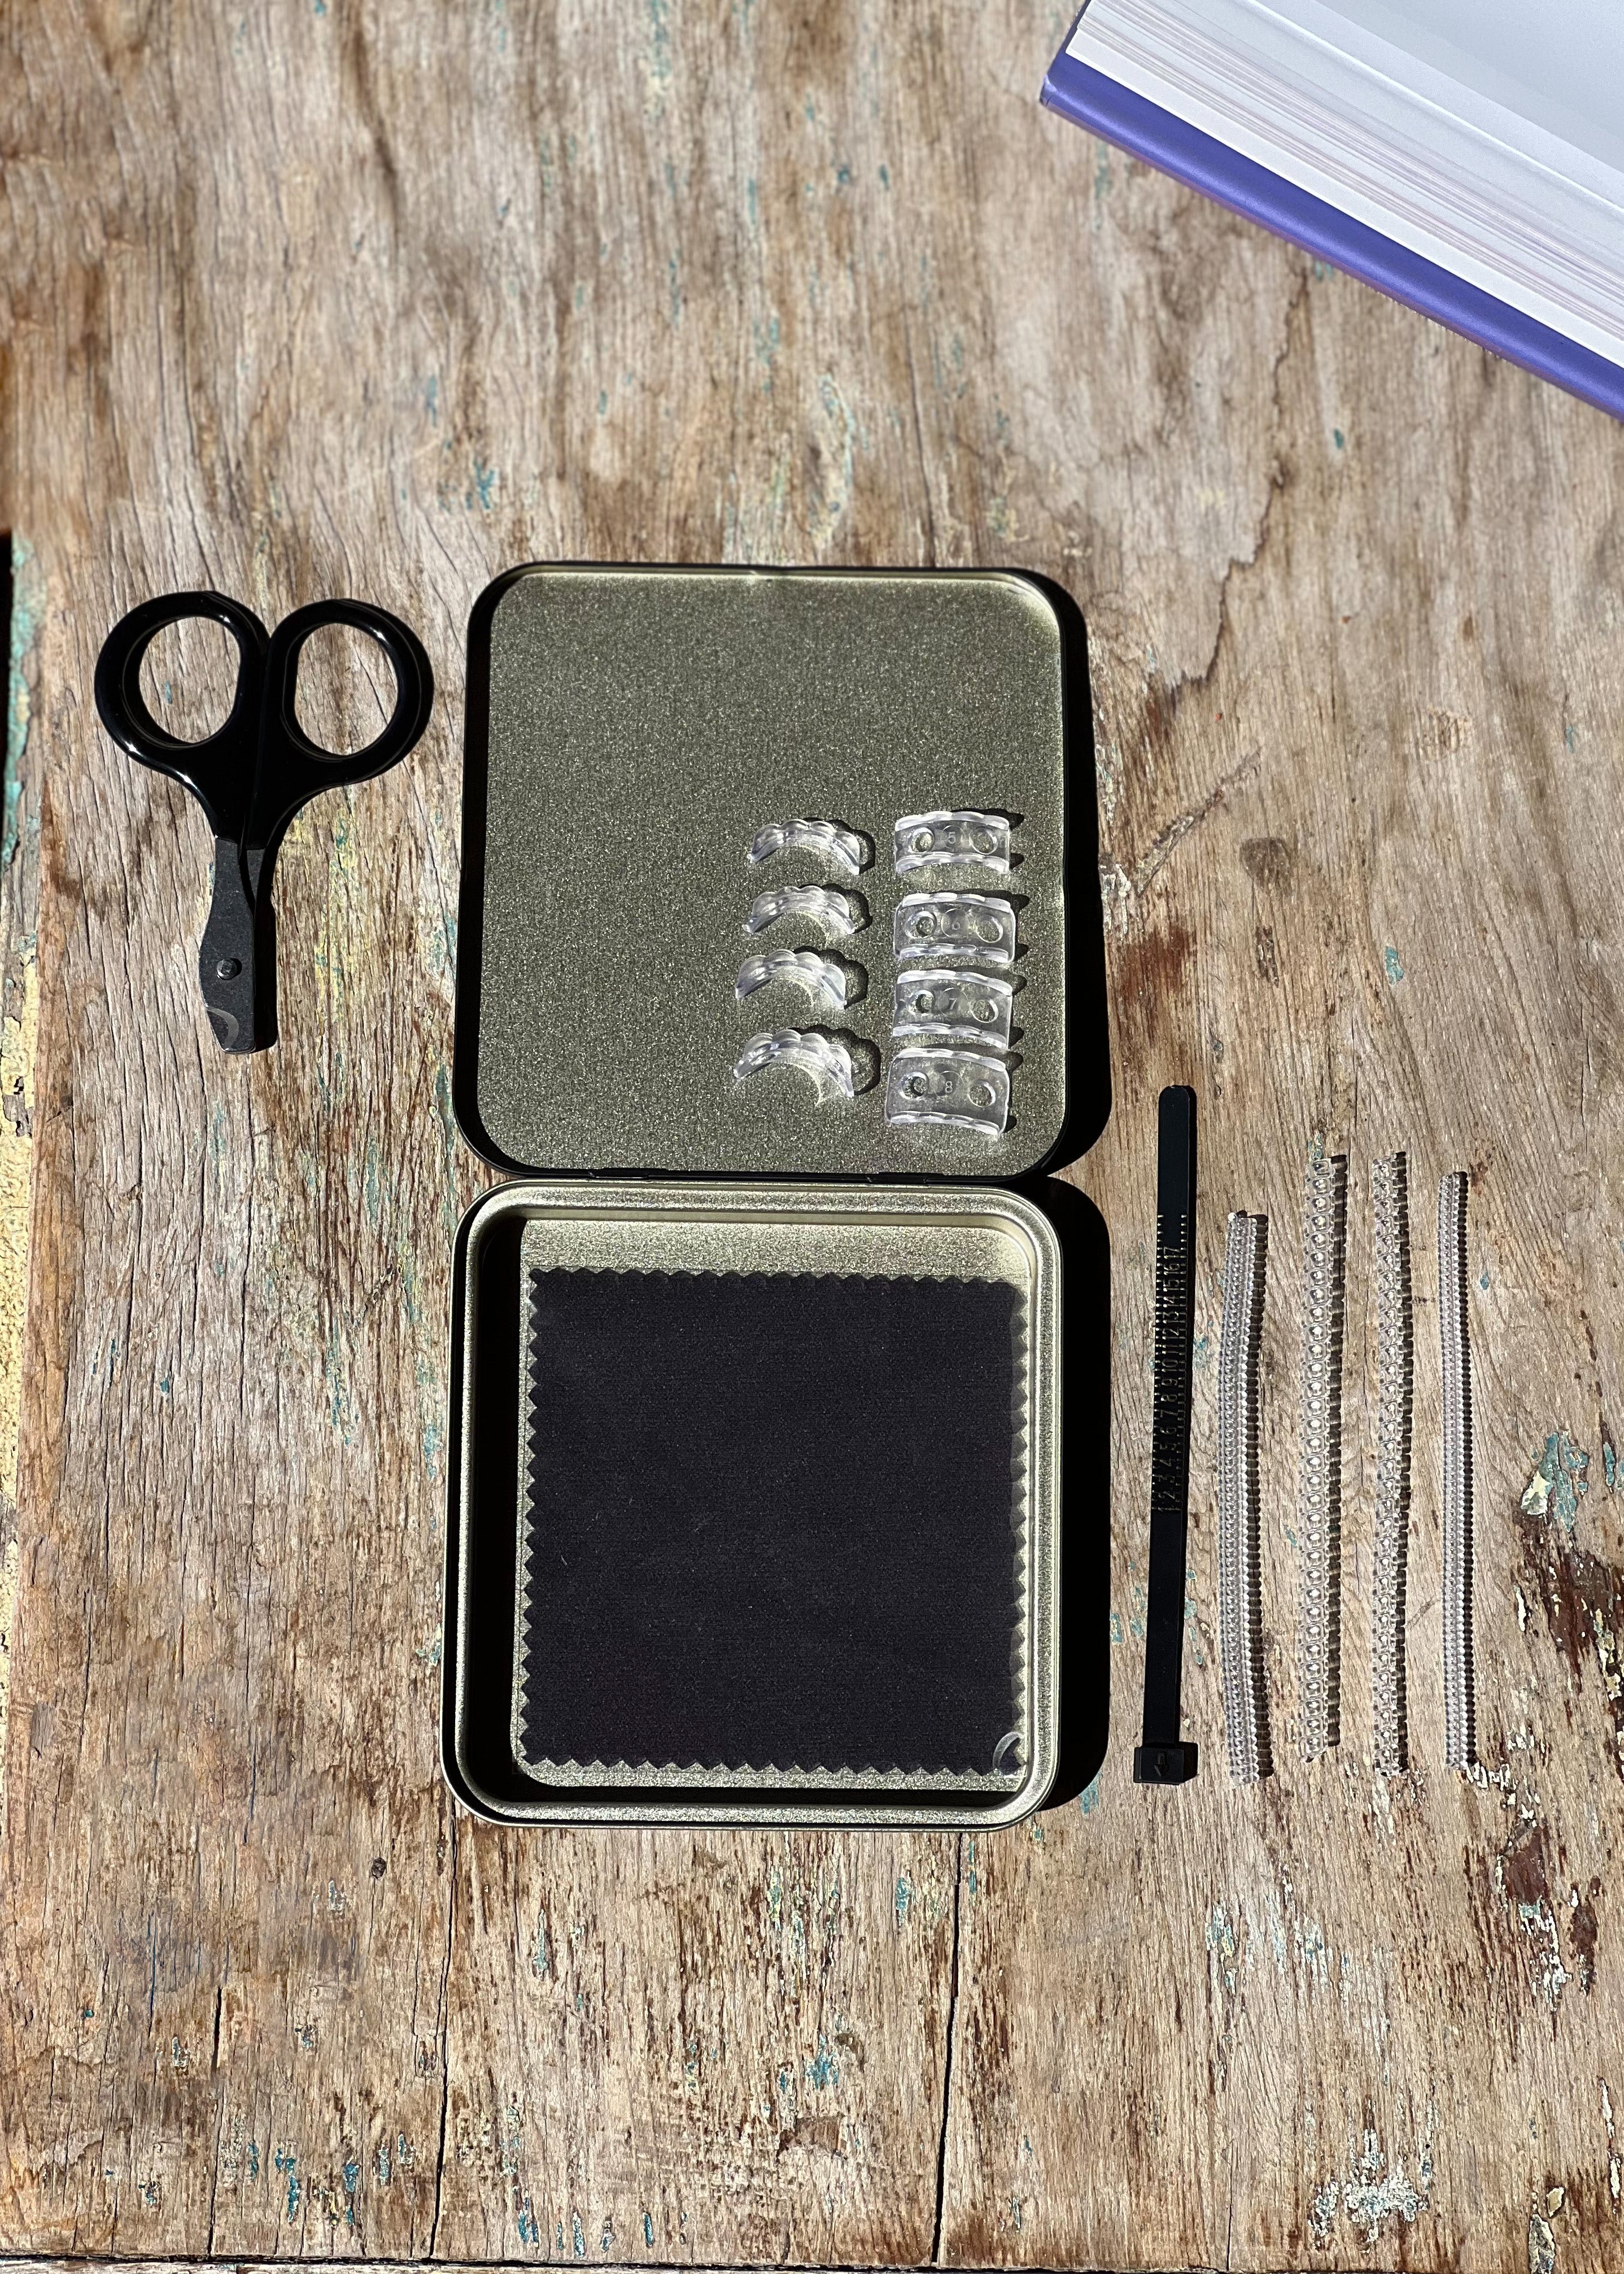 Ring Size Adjuster Kit | Simple Self Resize Kit